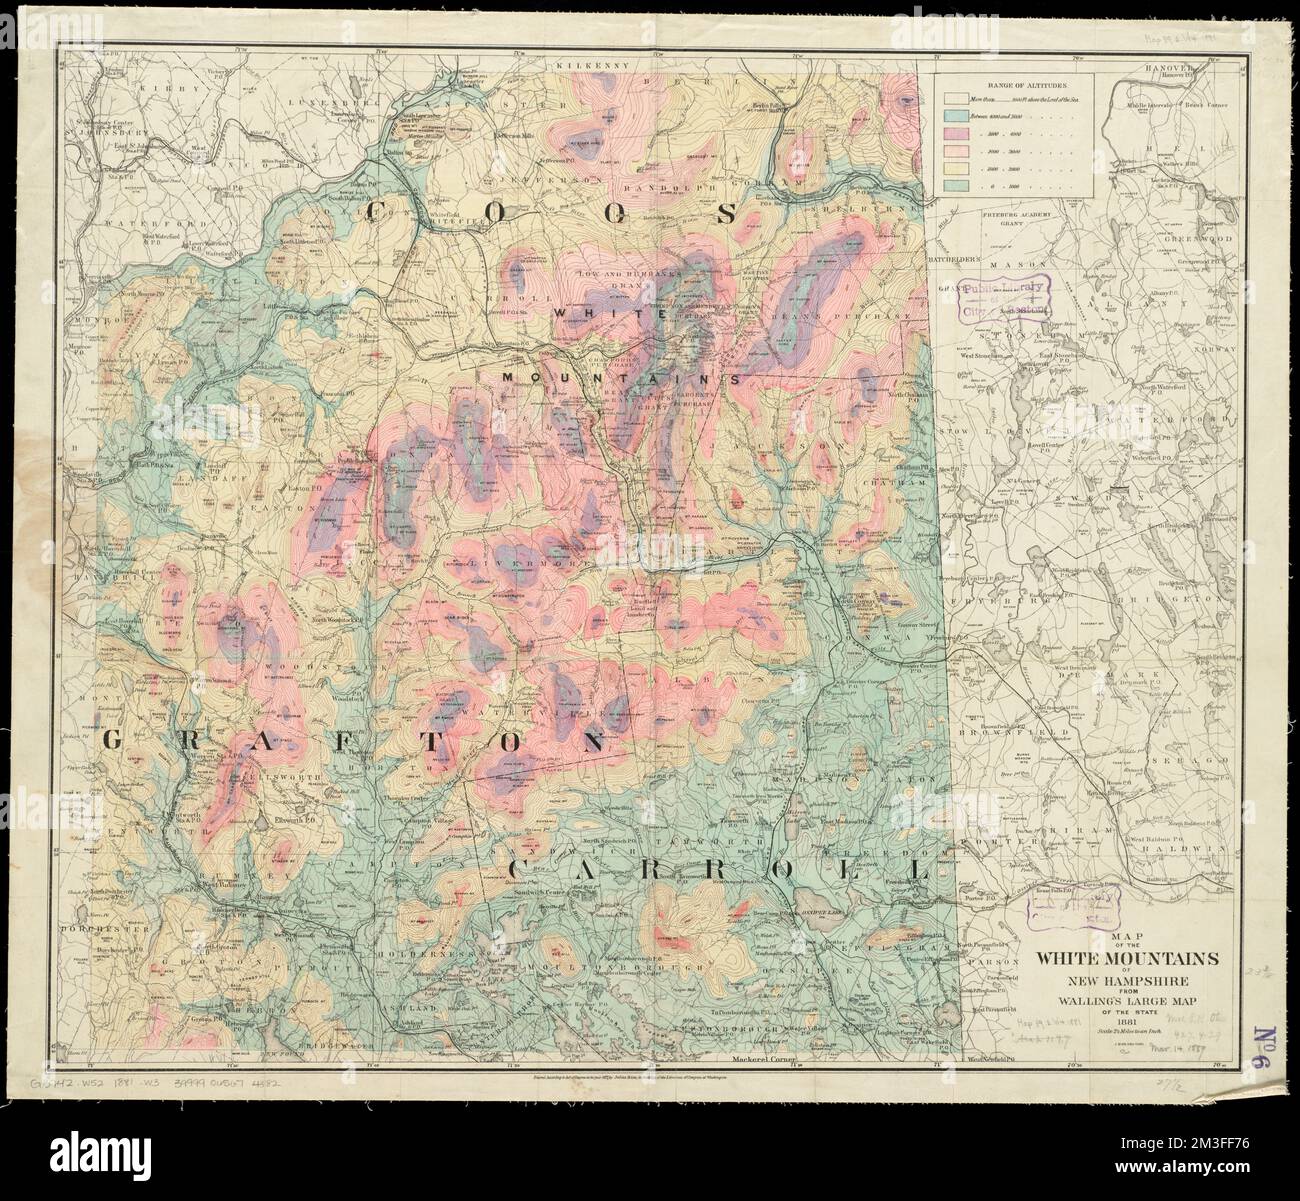 Karte der White Mountains von New Hampshire aus der großen Karte des Bundesstaates Walling, 1881 , White Mountains N.H. and Me., Maps Norman B. Leventhal Map Center Collection Stockfoto